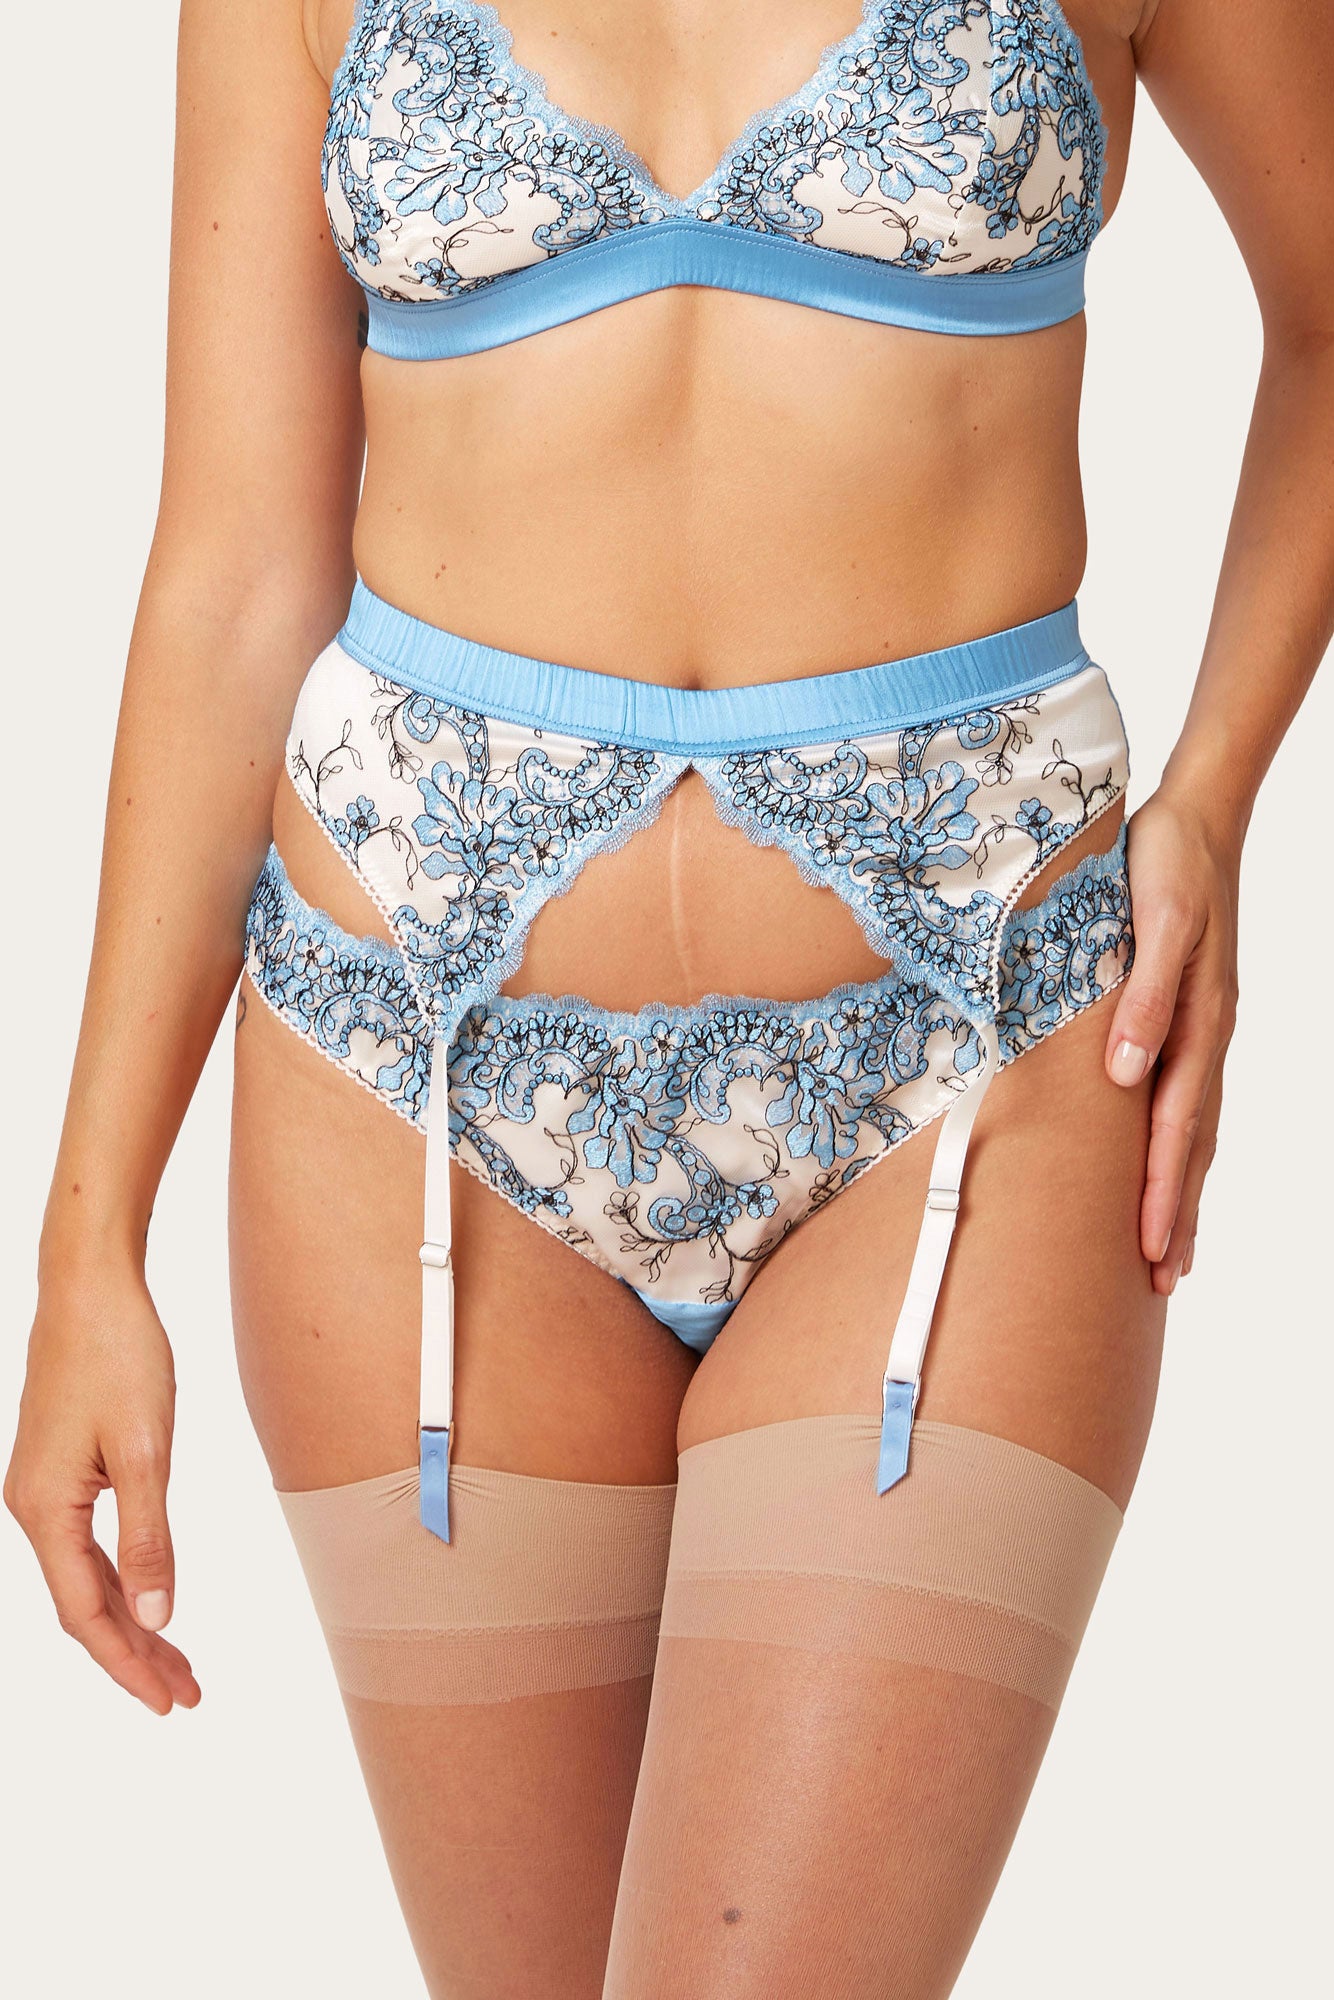 Portia blue silk suspender belt and lingerie set